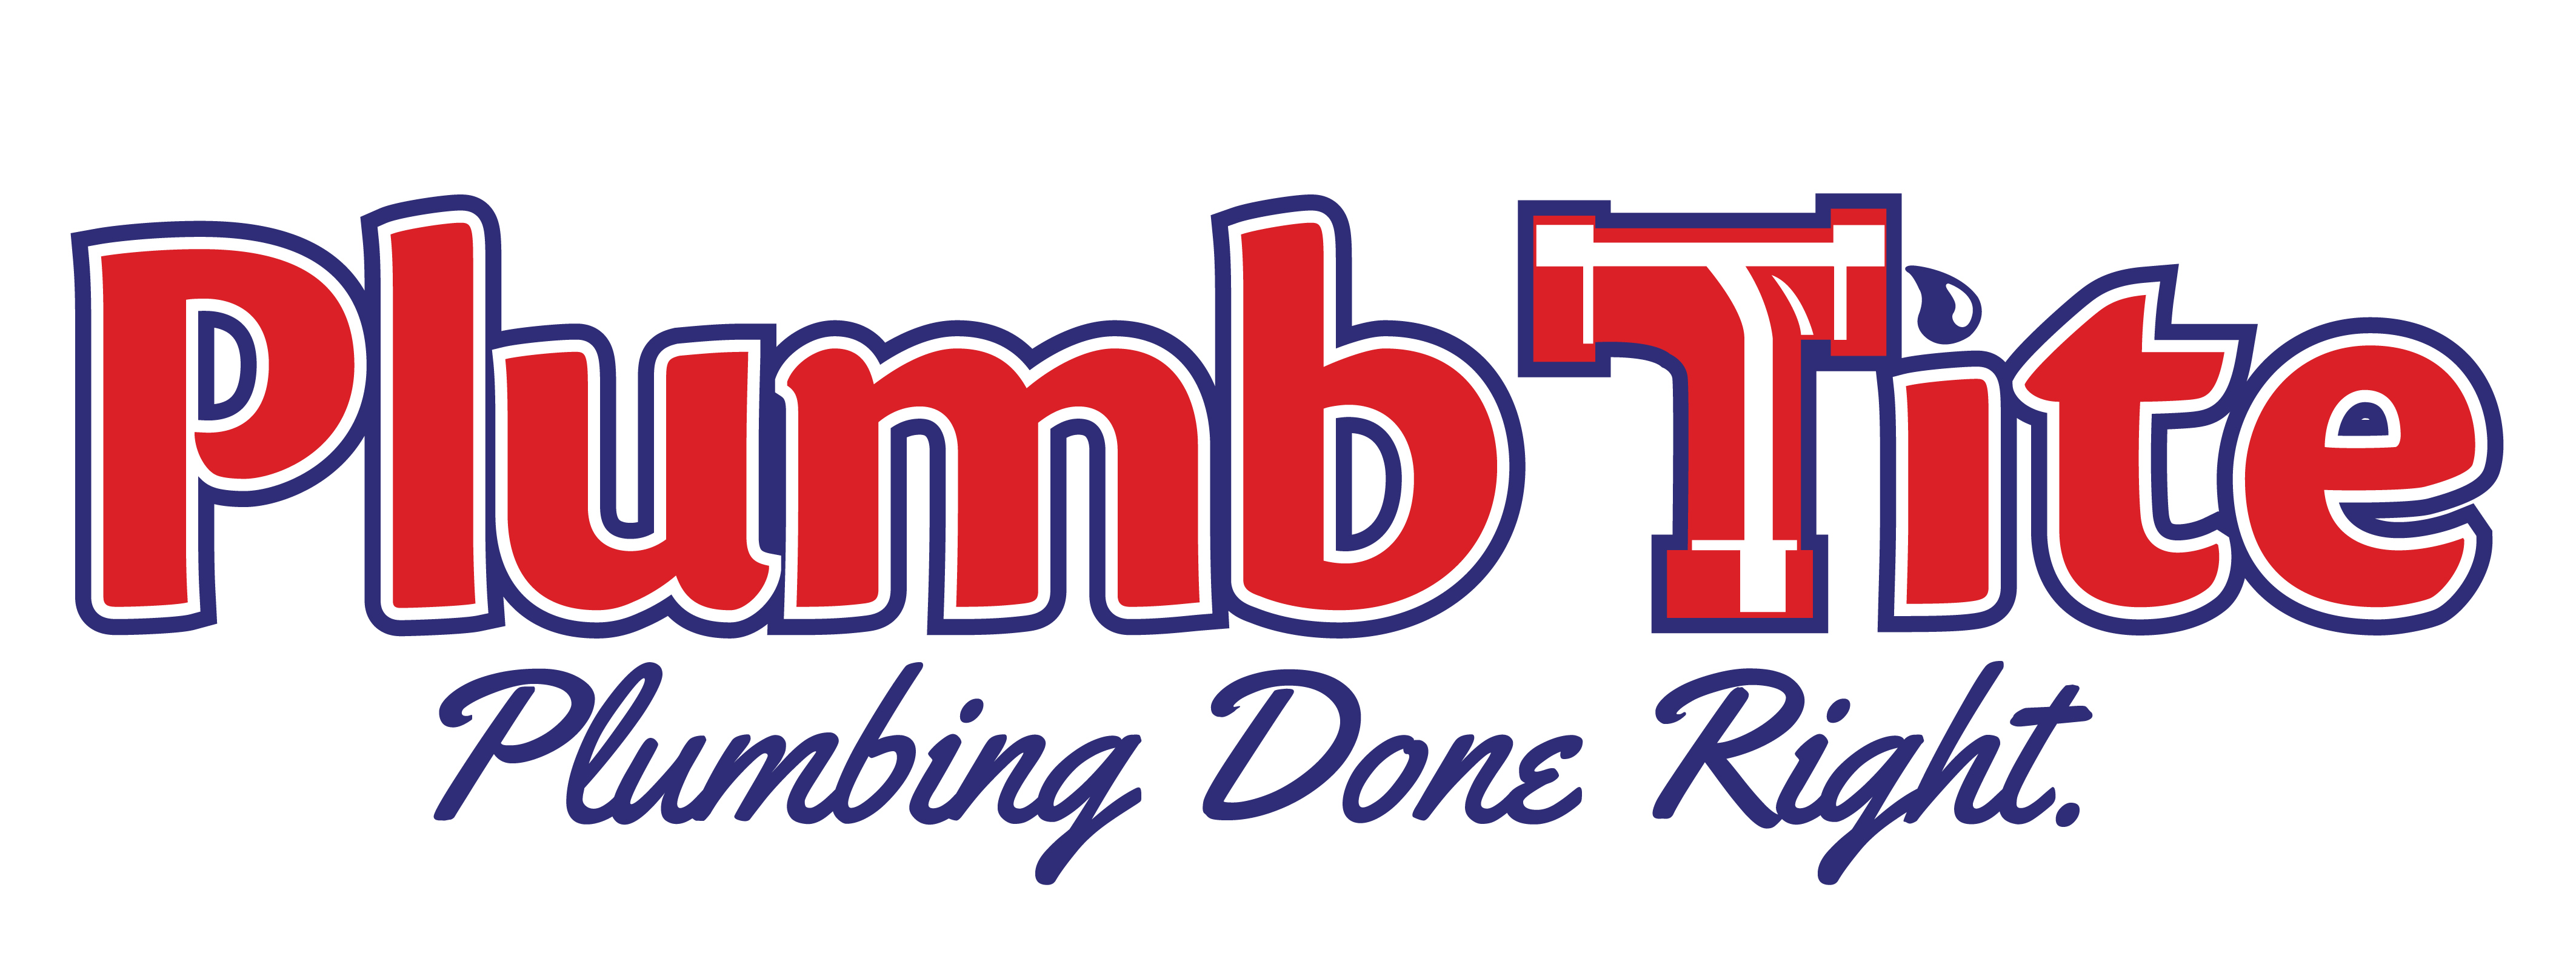 Plumb Tite, LLC Logo